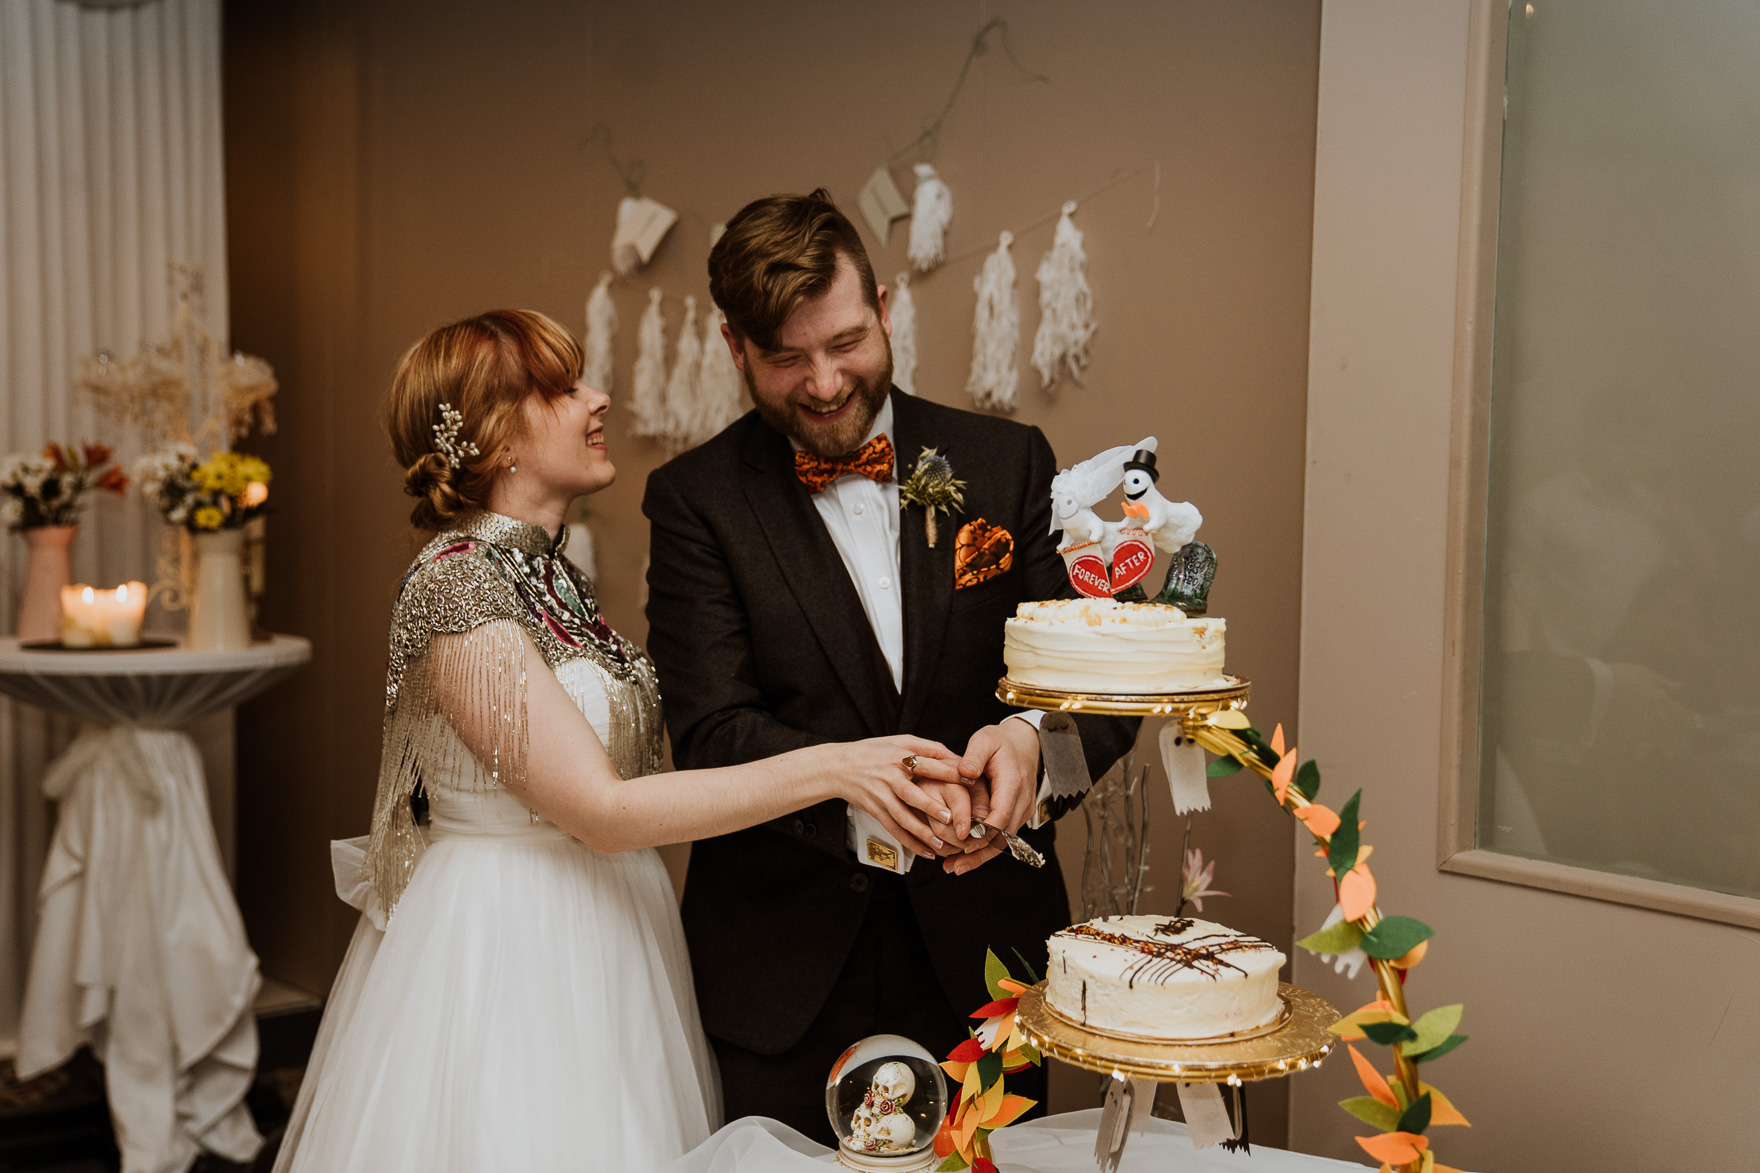 A person cutting a wedding cake